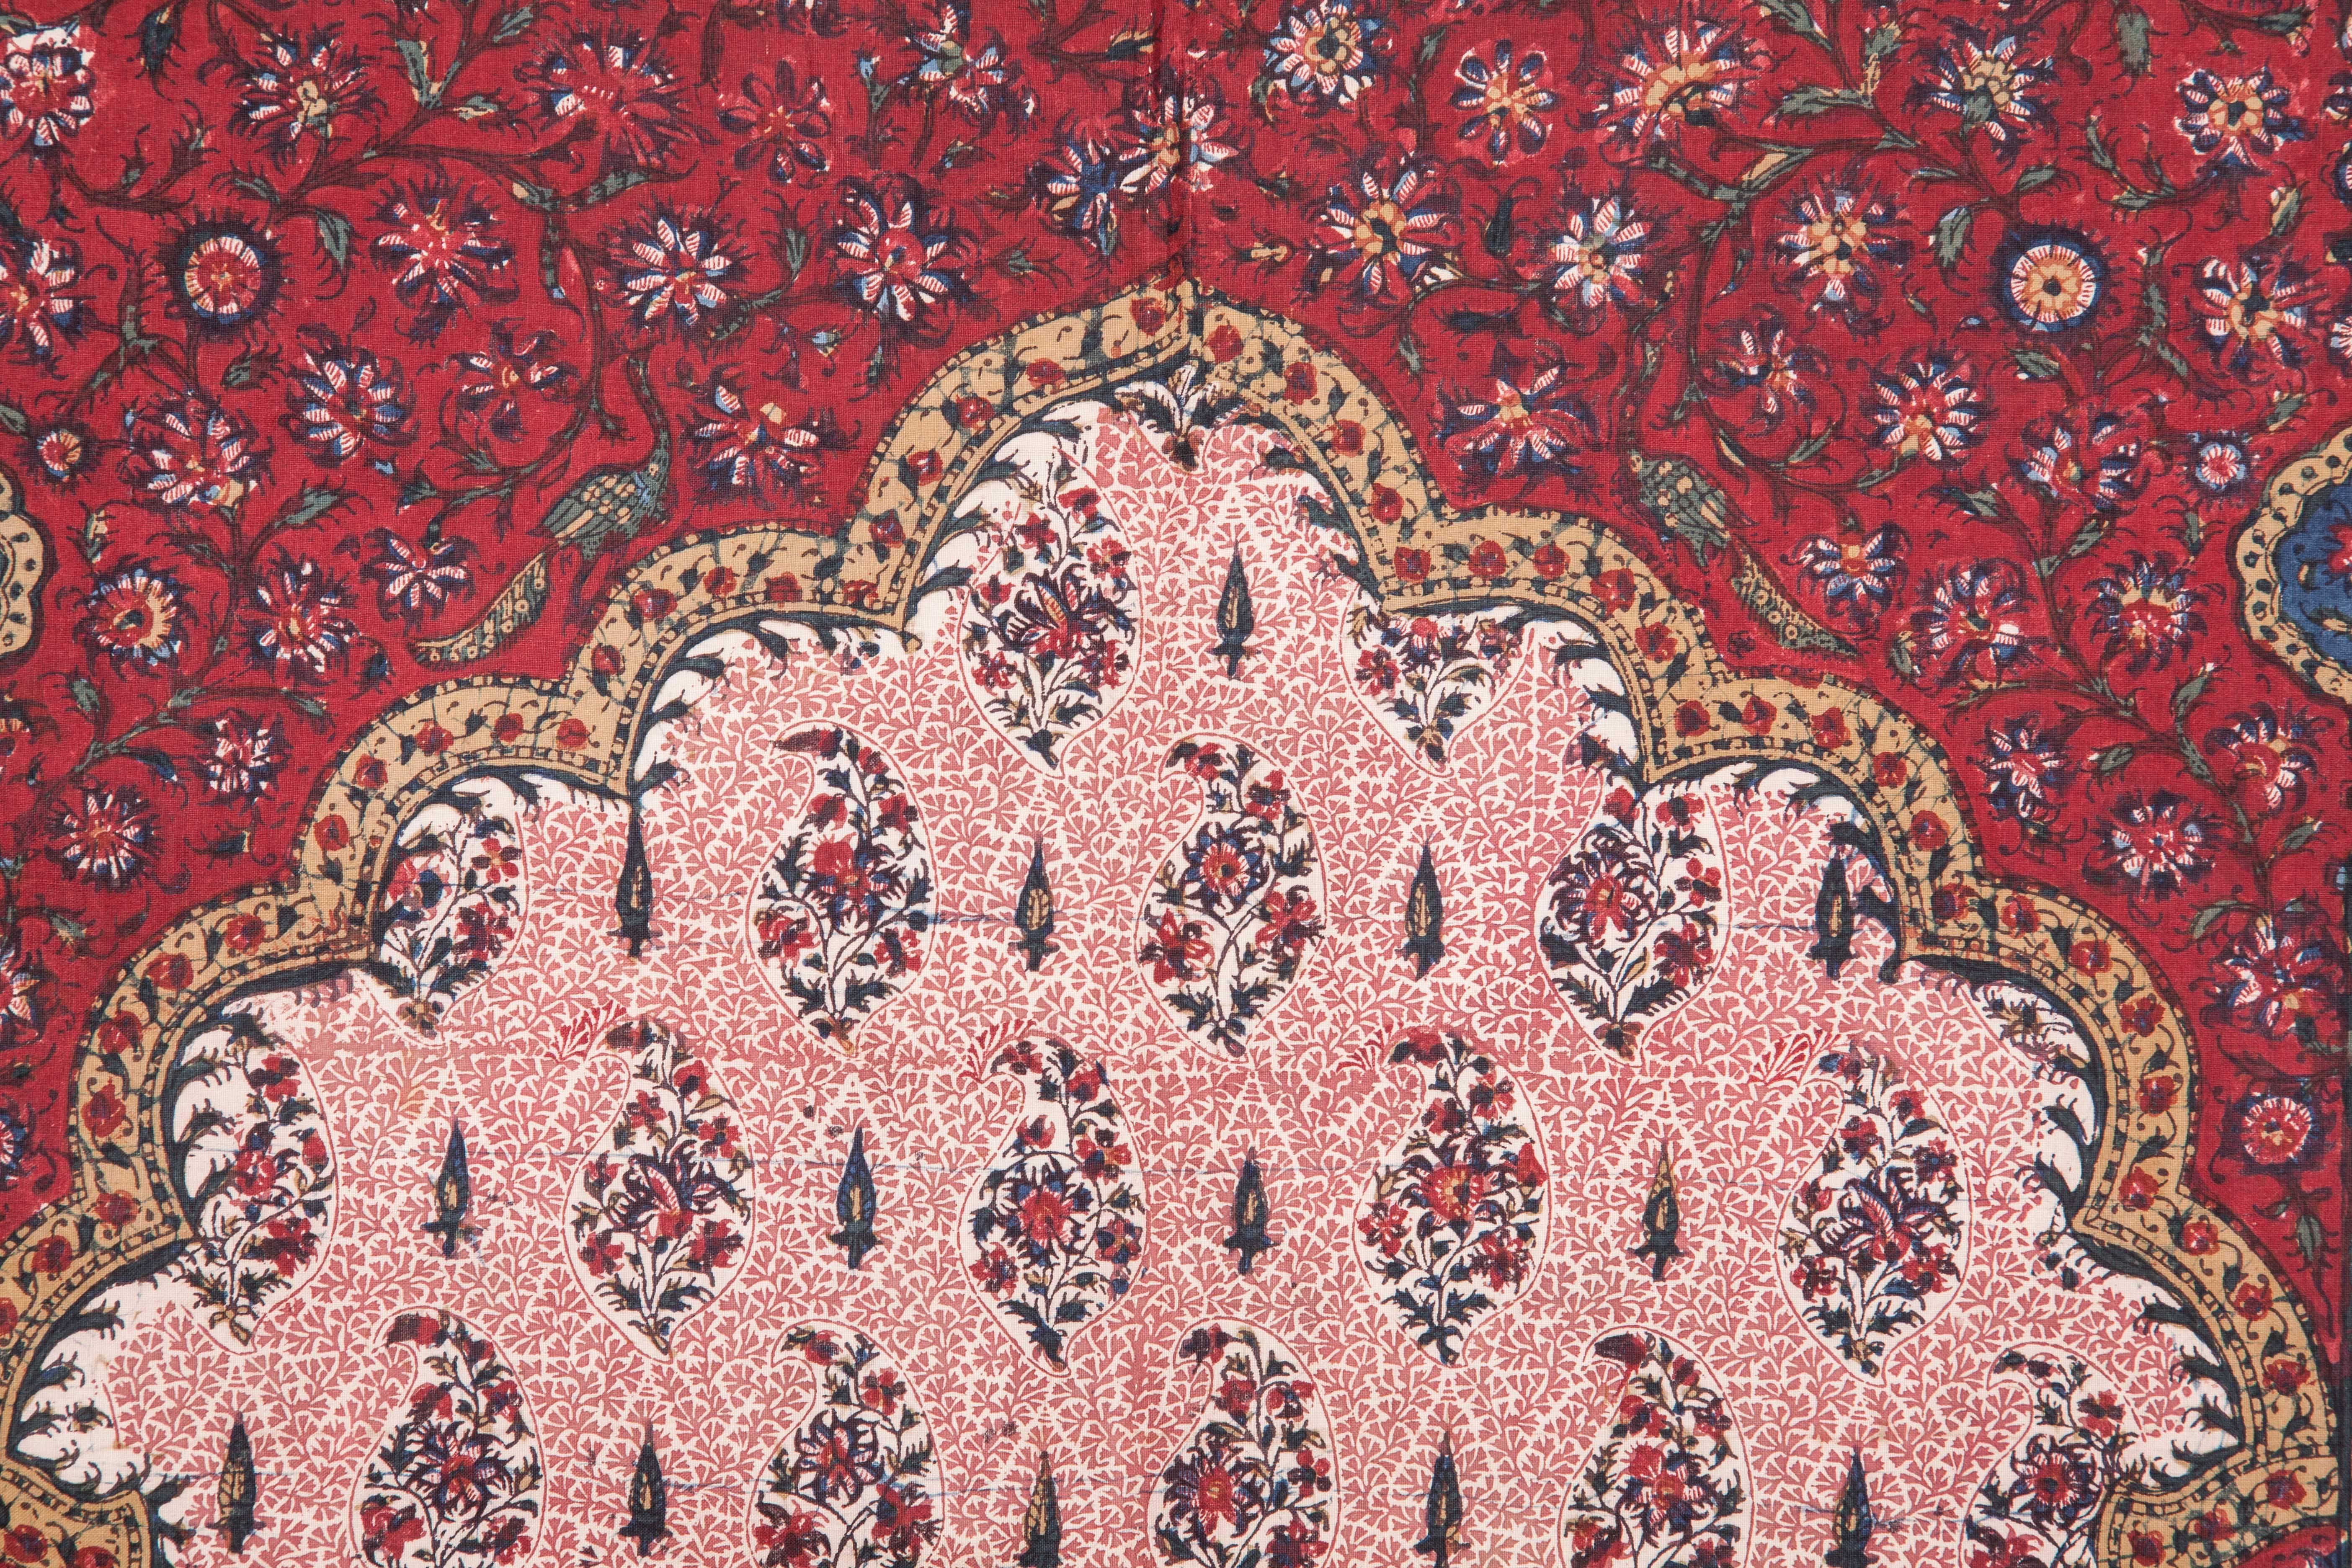 Painted 19th Century Indian Qalamkari Panel for Persian Market